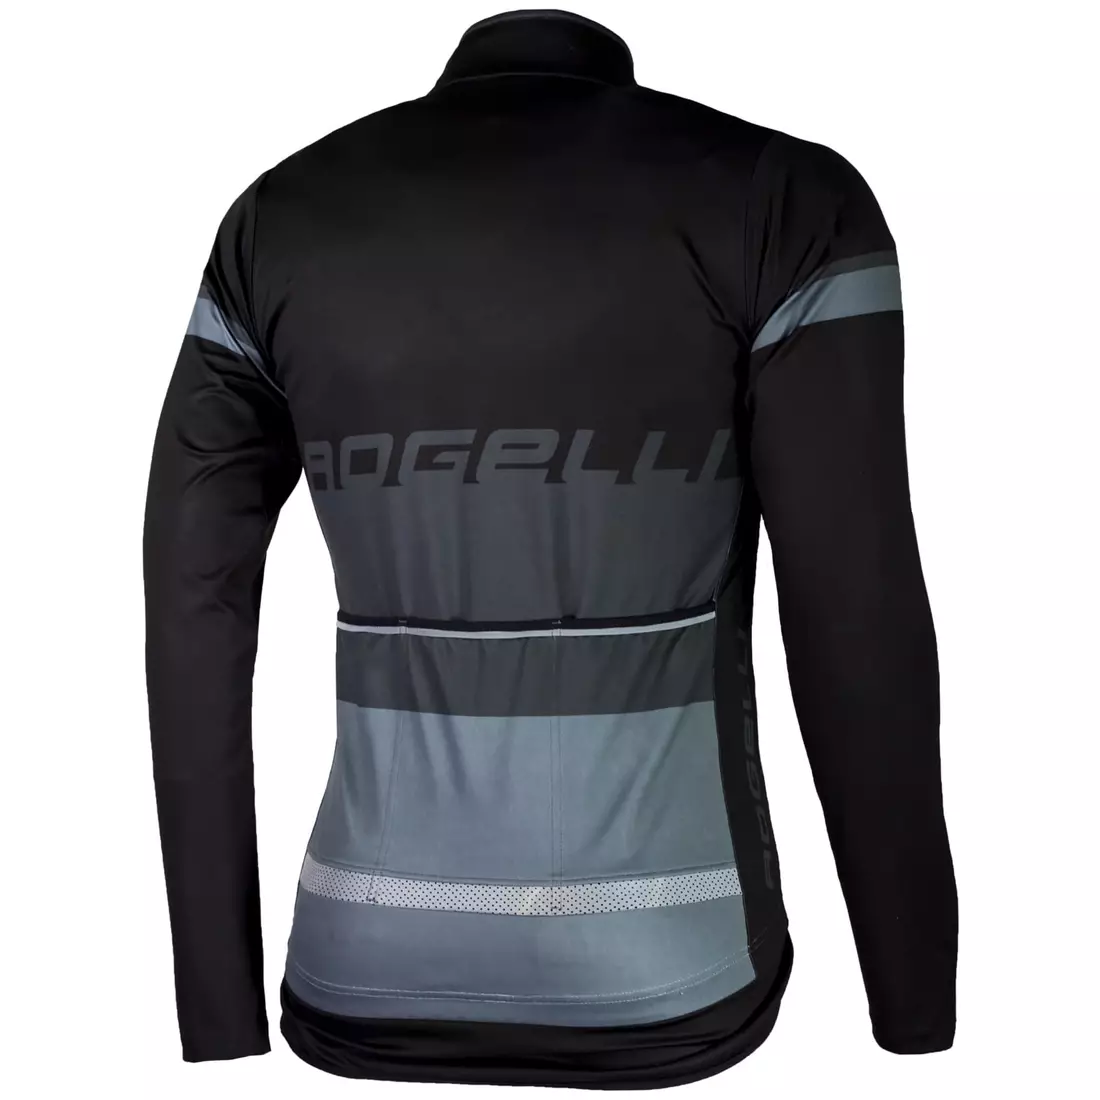 Rogelli HYDRO waterproof men's long sleeve cycling jersey, black and gray